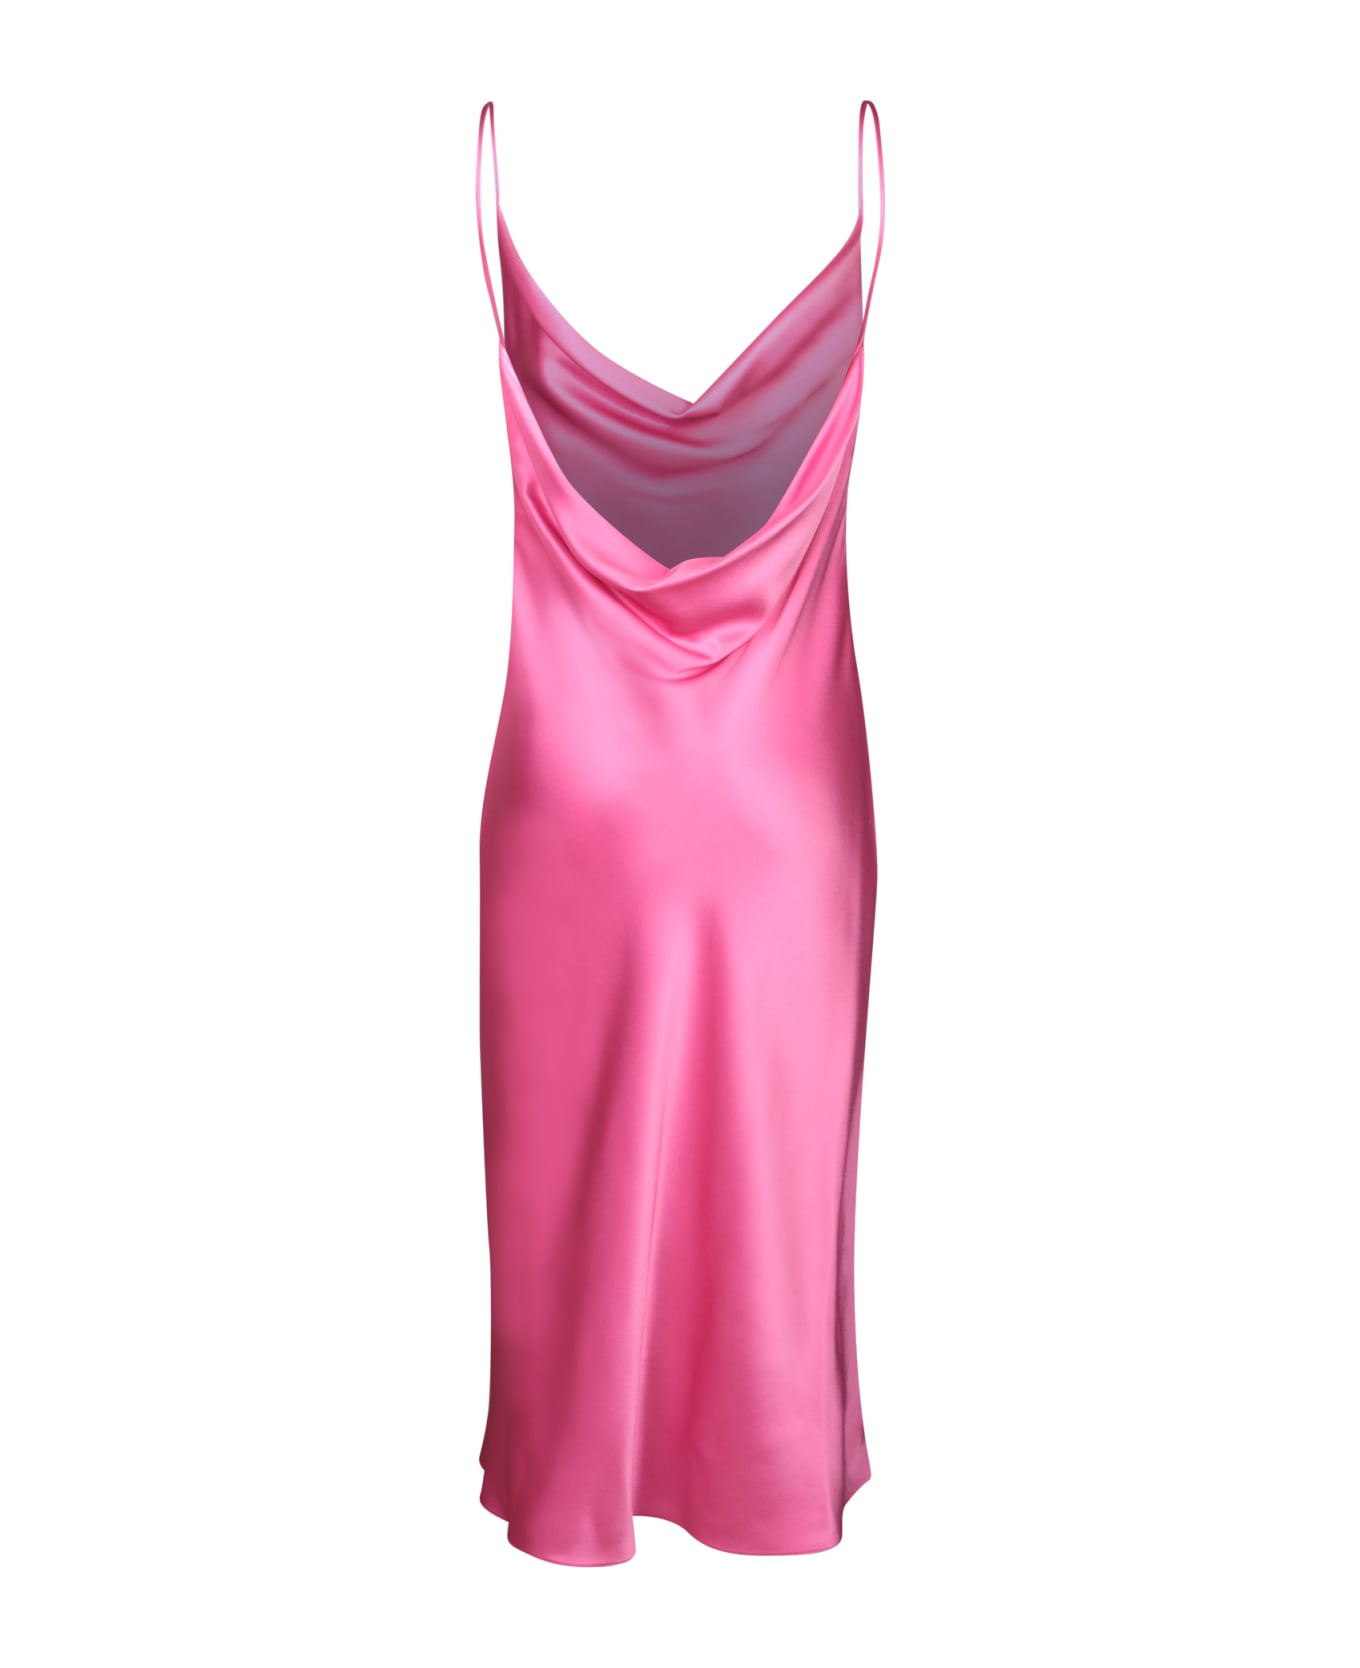 Stella McCartney Dress Double Satin - Bright Pink